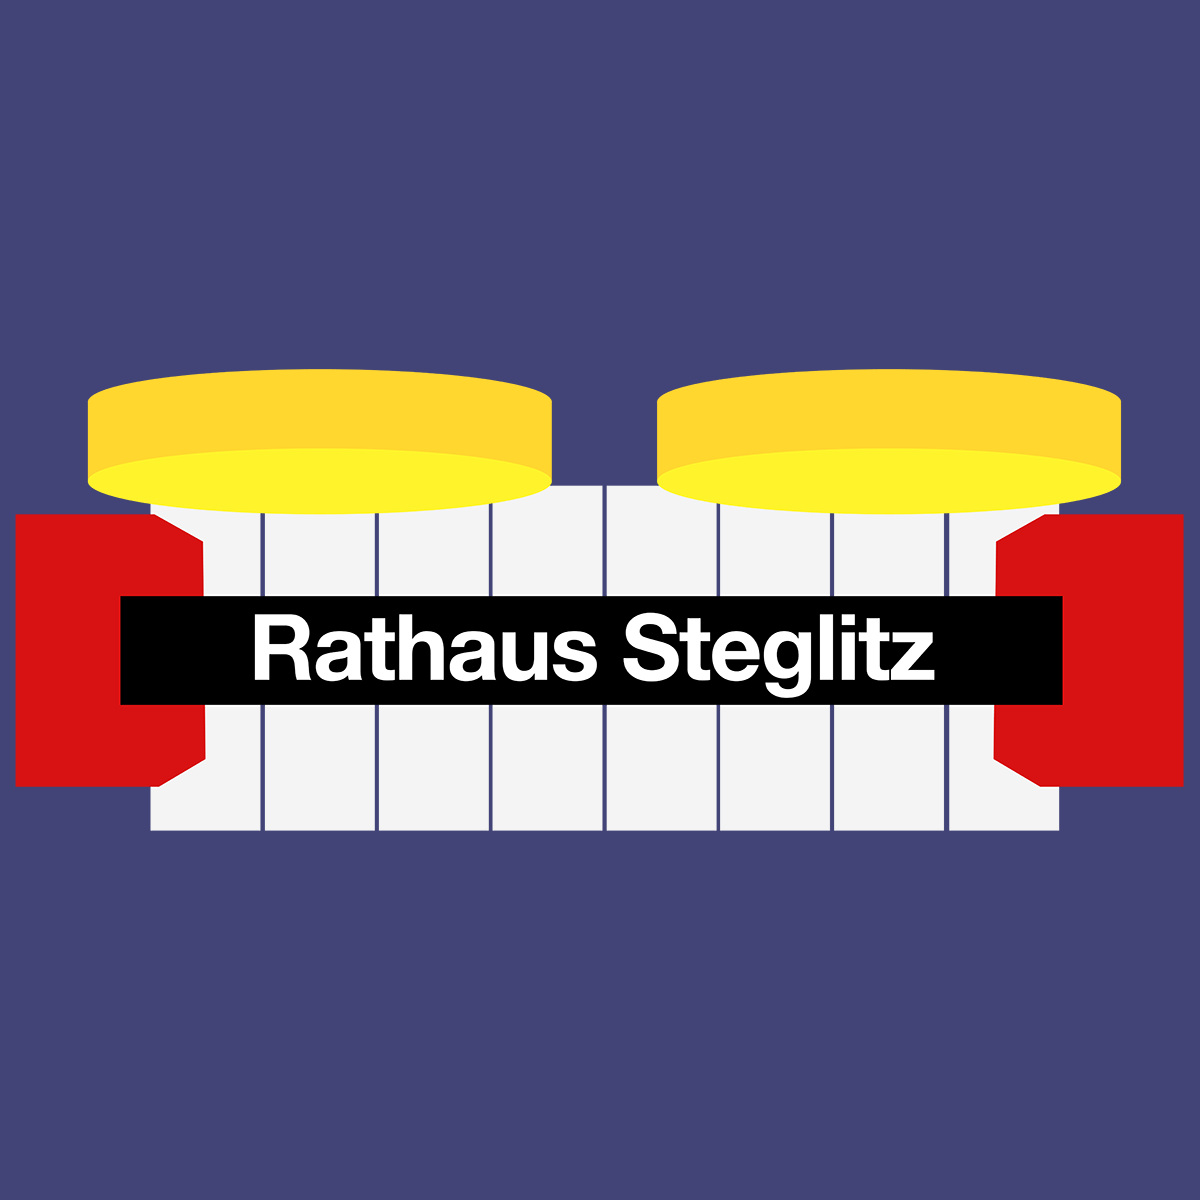 Rathaus Steglitz